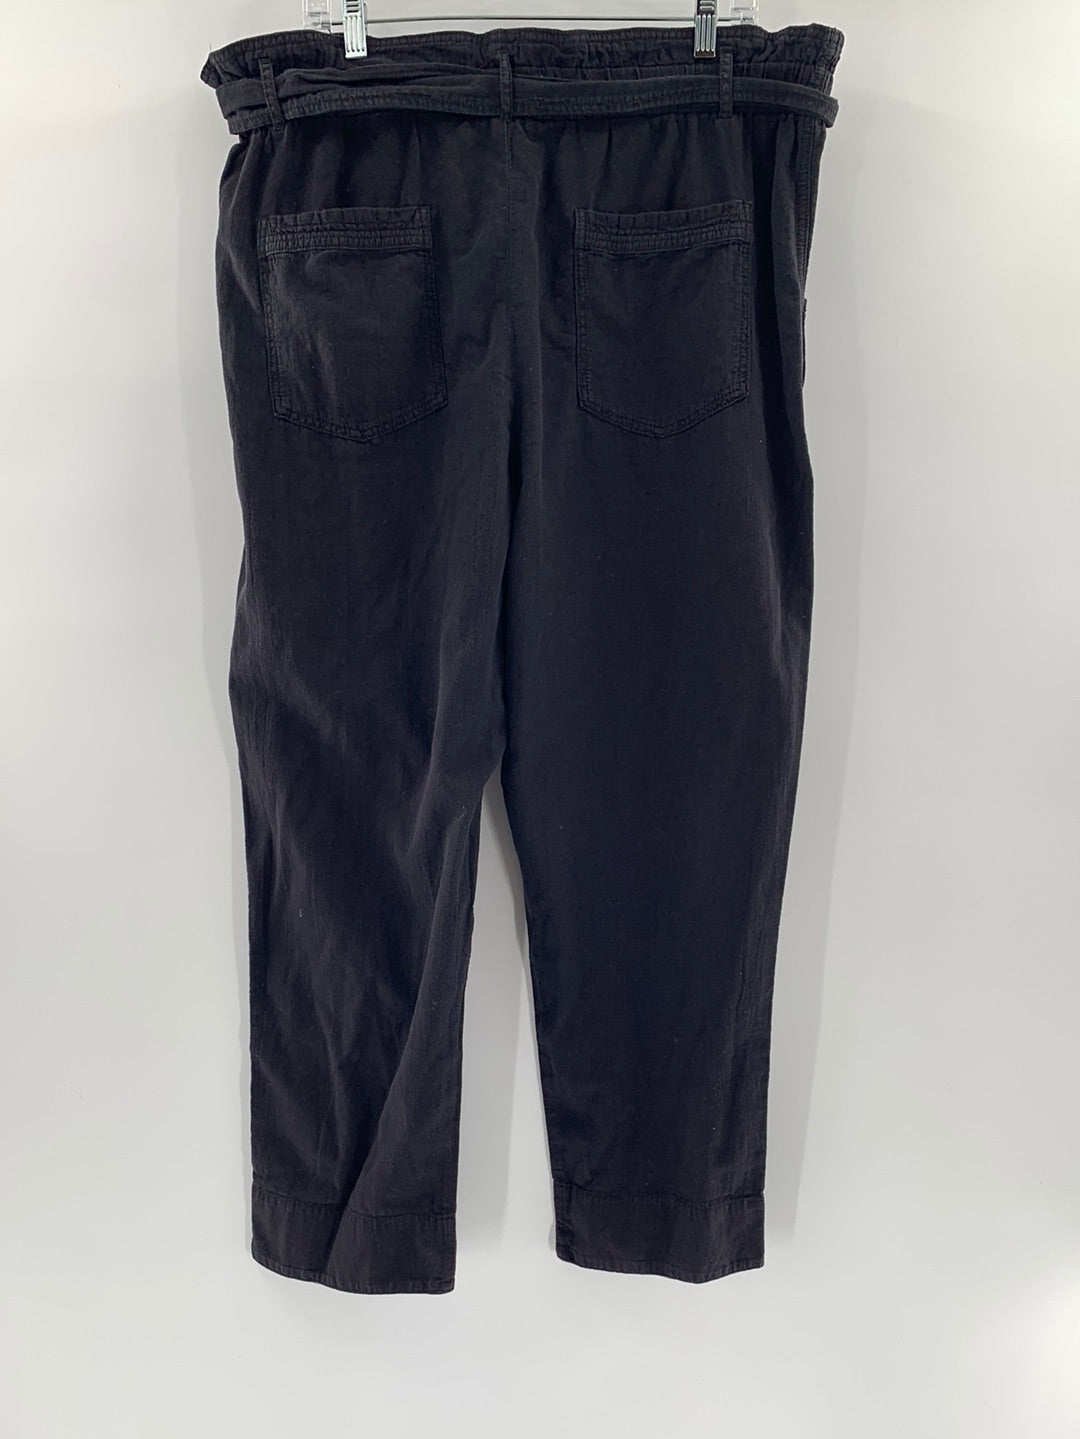 Anthropologie Navy Hoop Belt Pants (Size XL)